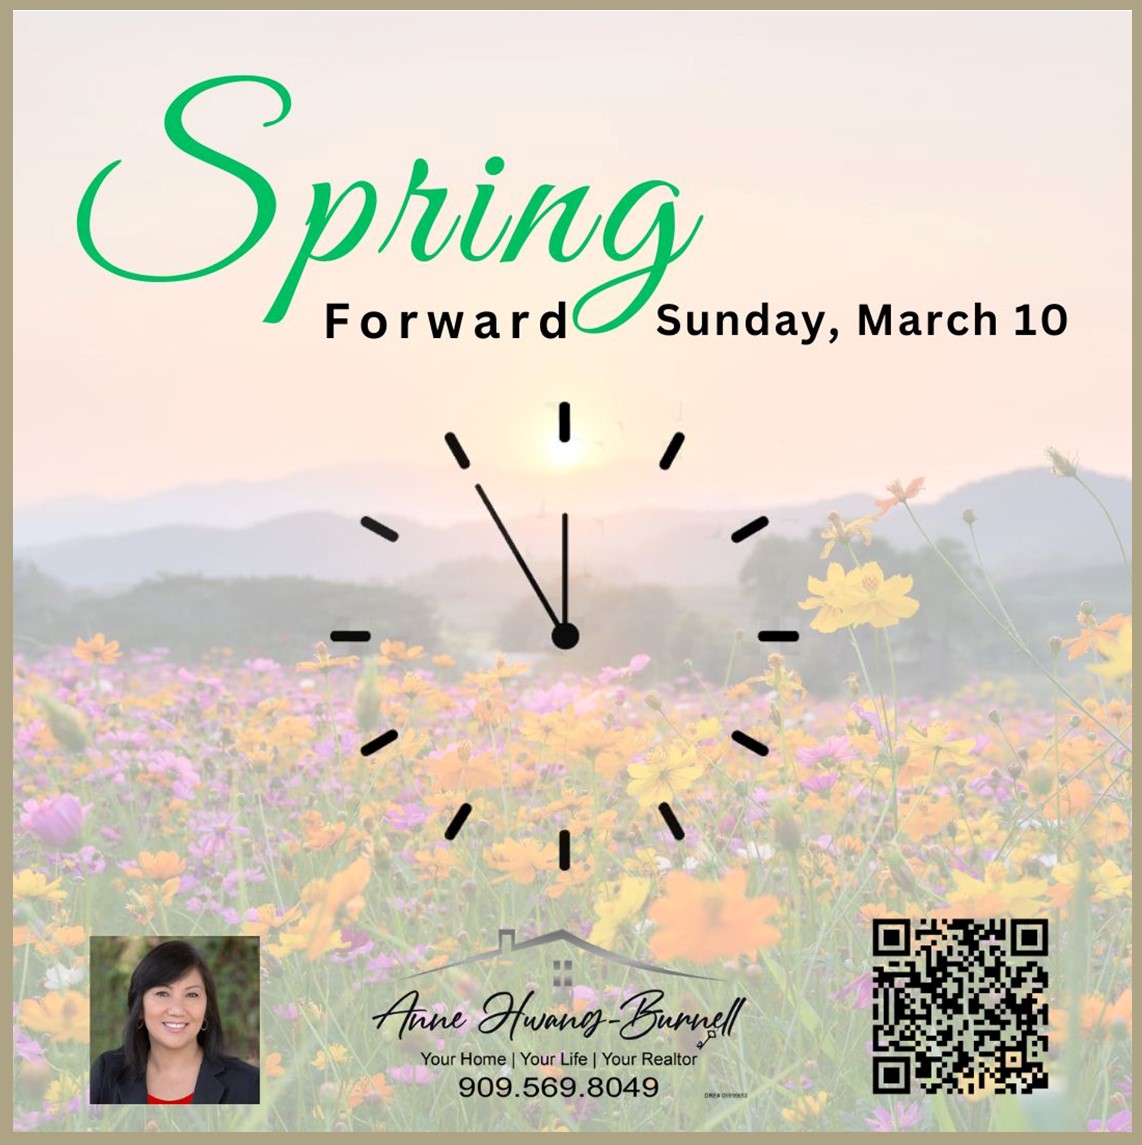 Don't forget to spring forward this Sunday! ⏰ Set your clocks ahead and embrace the longer days ahead.

#annehwangburnellrealtor #DaylightSavingsTime #SpringForward

california-houses.com